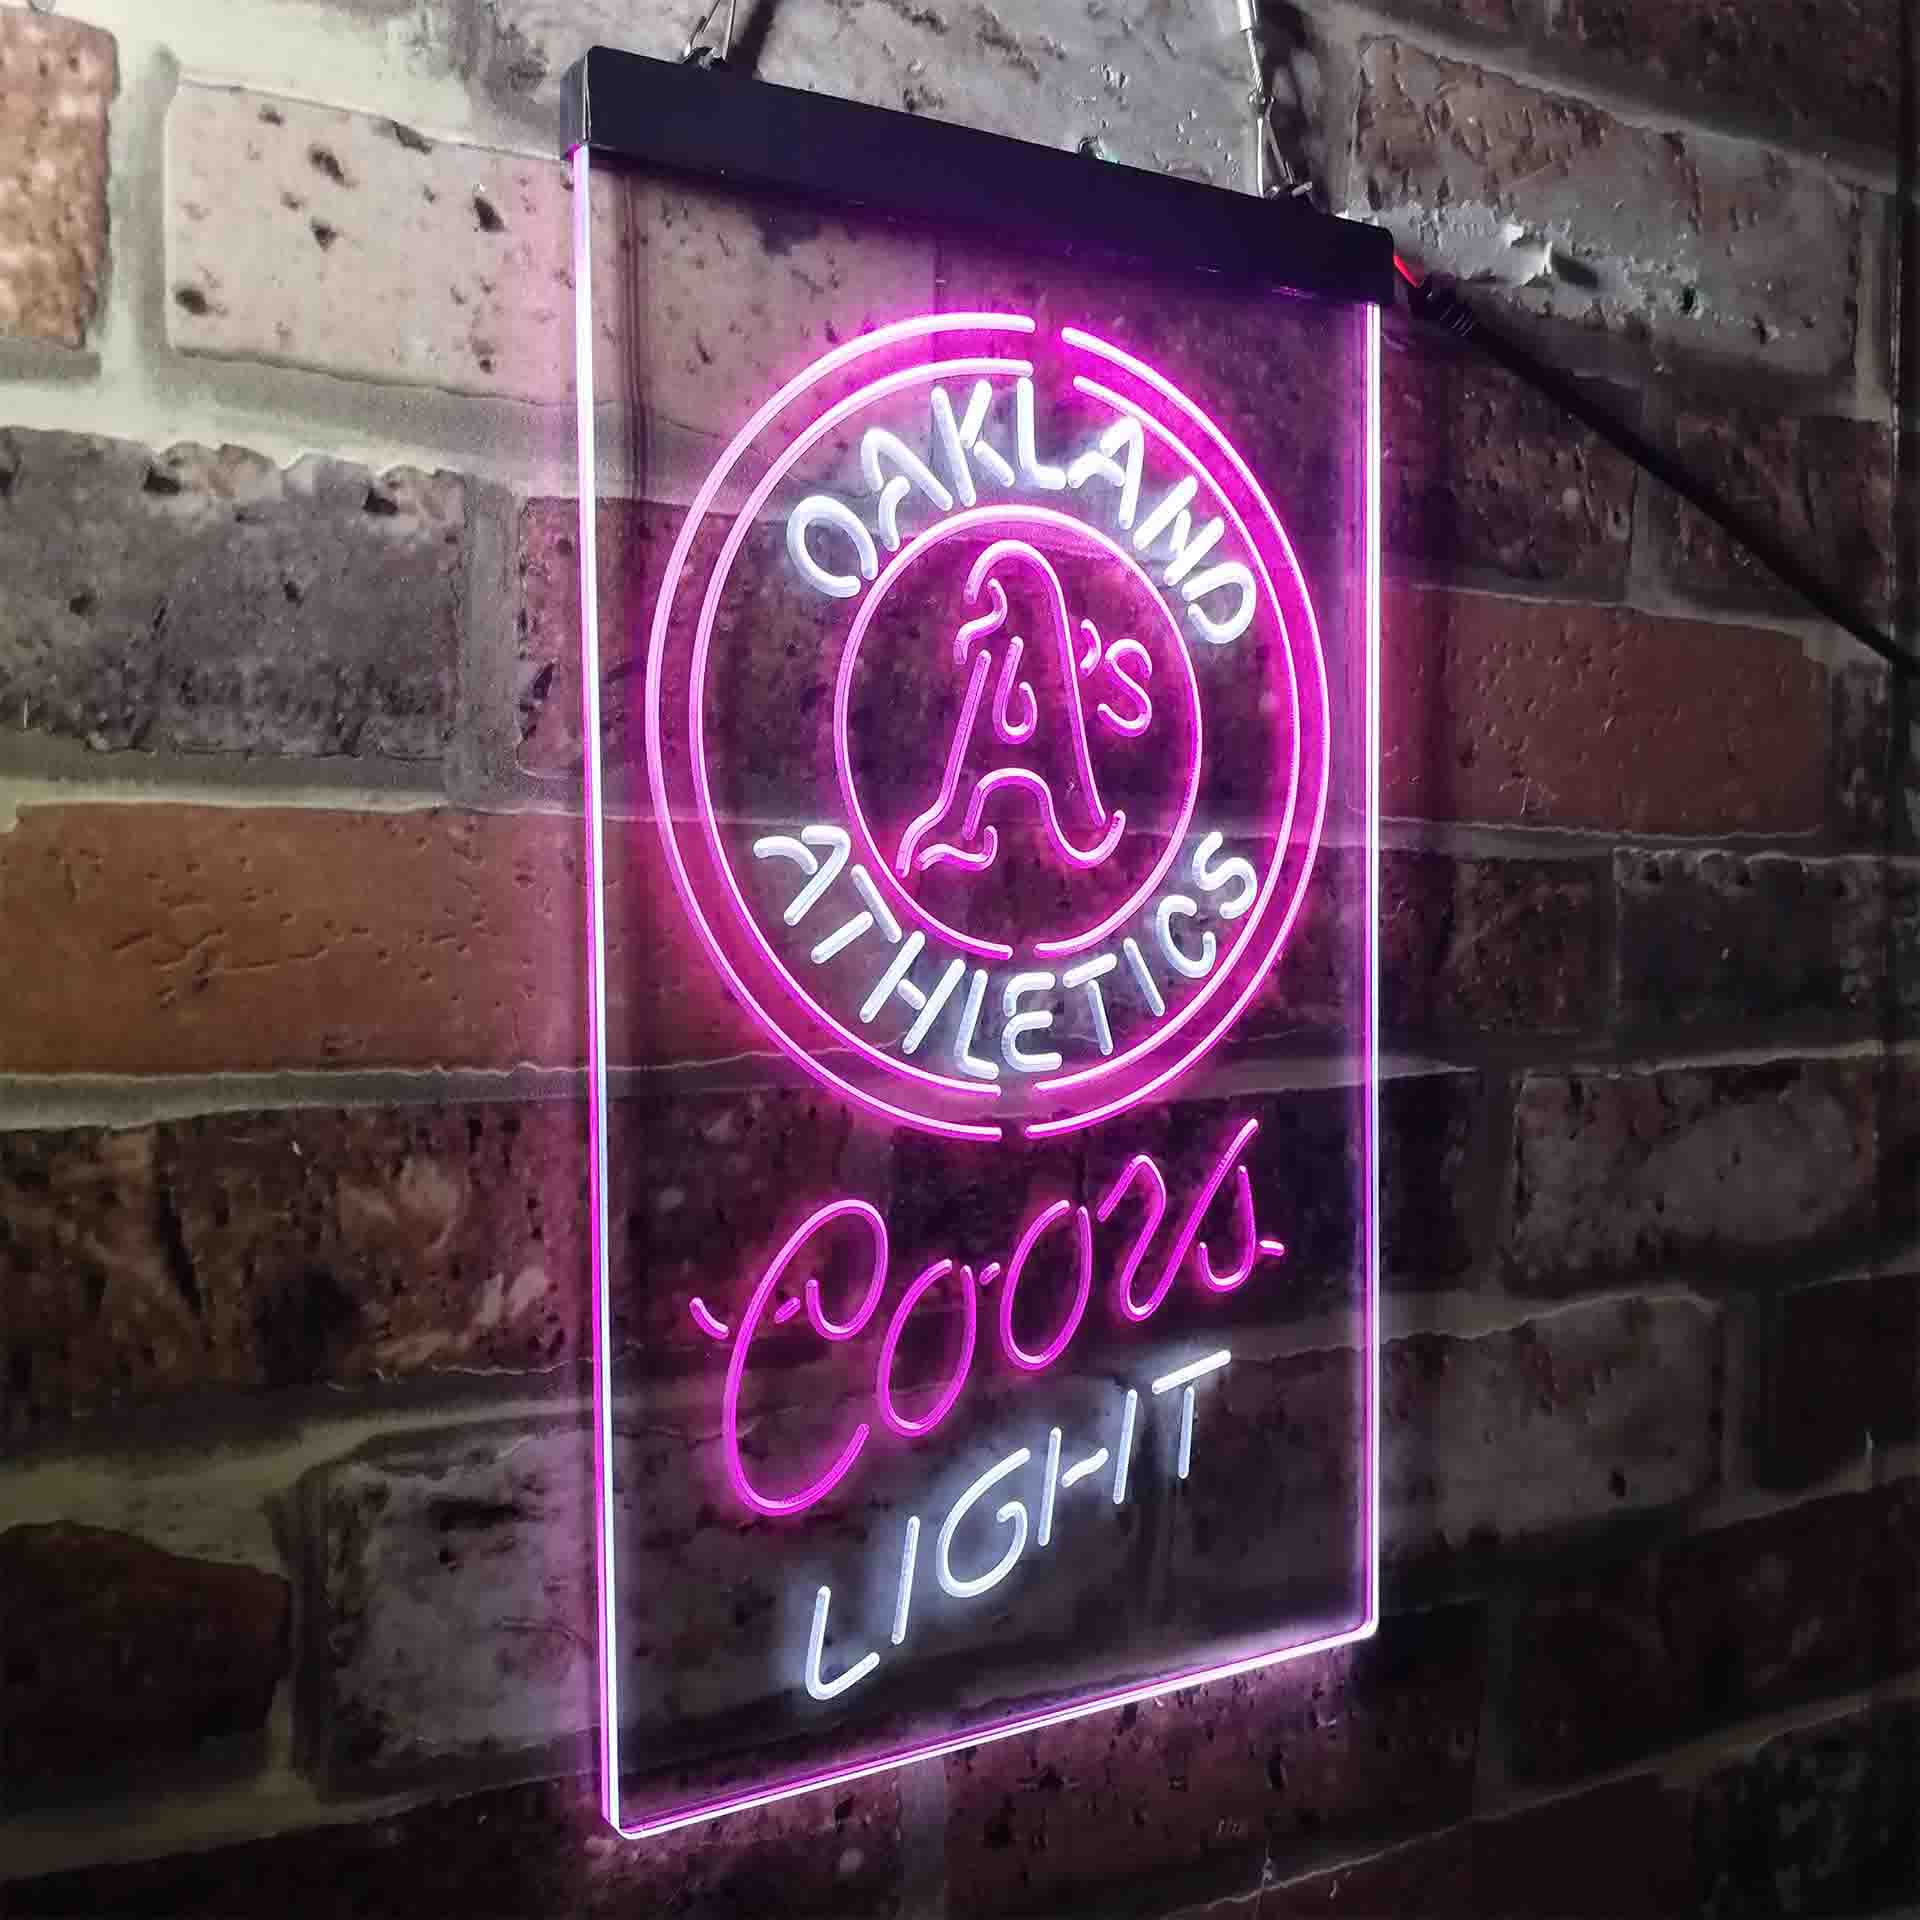 Oakland Athletics Coors Light Neon-Like LED Sign